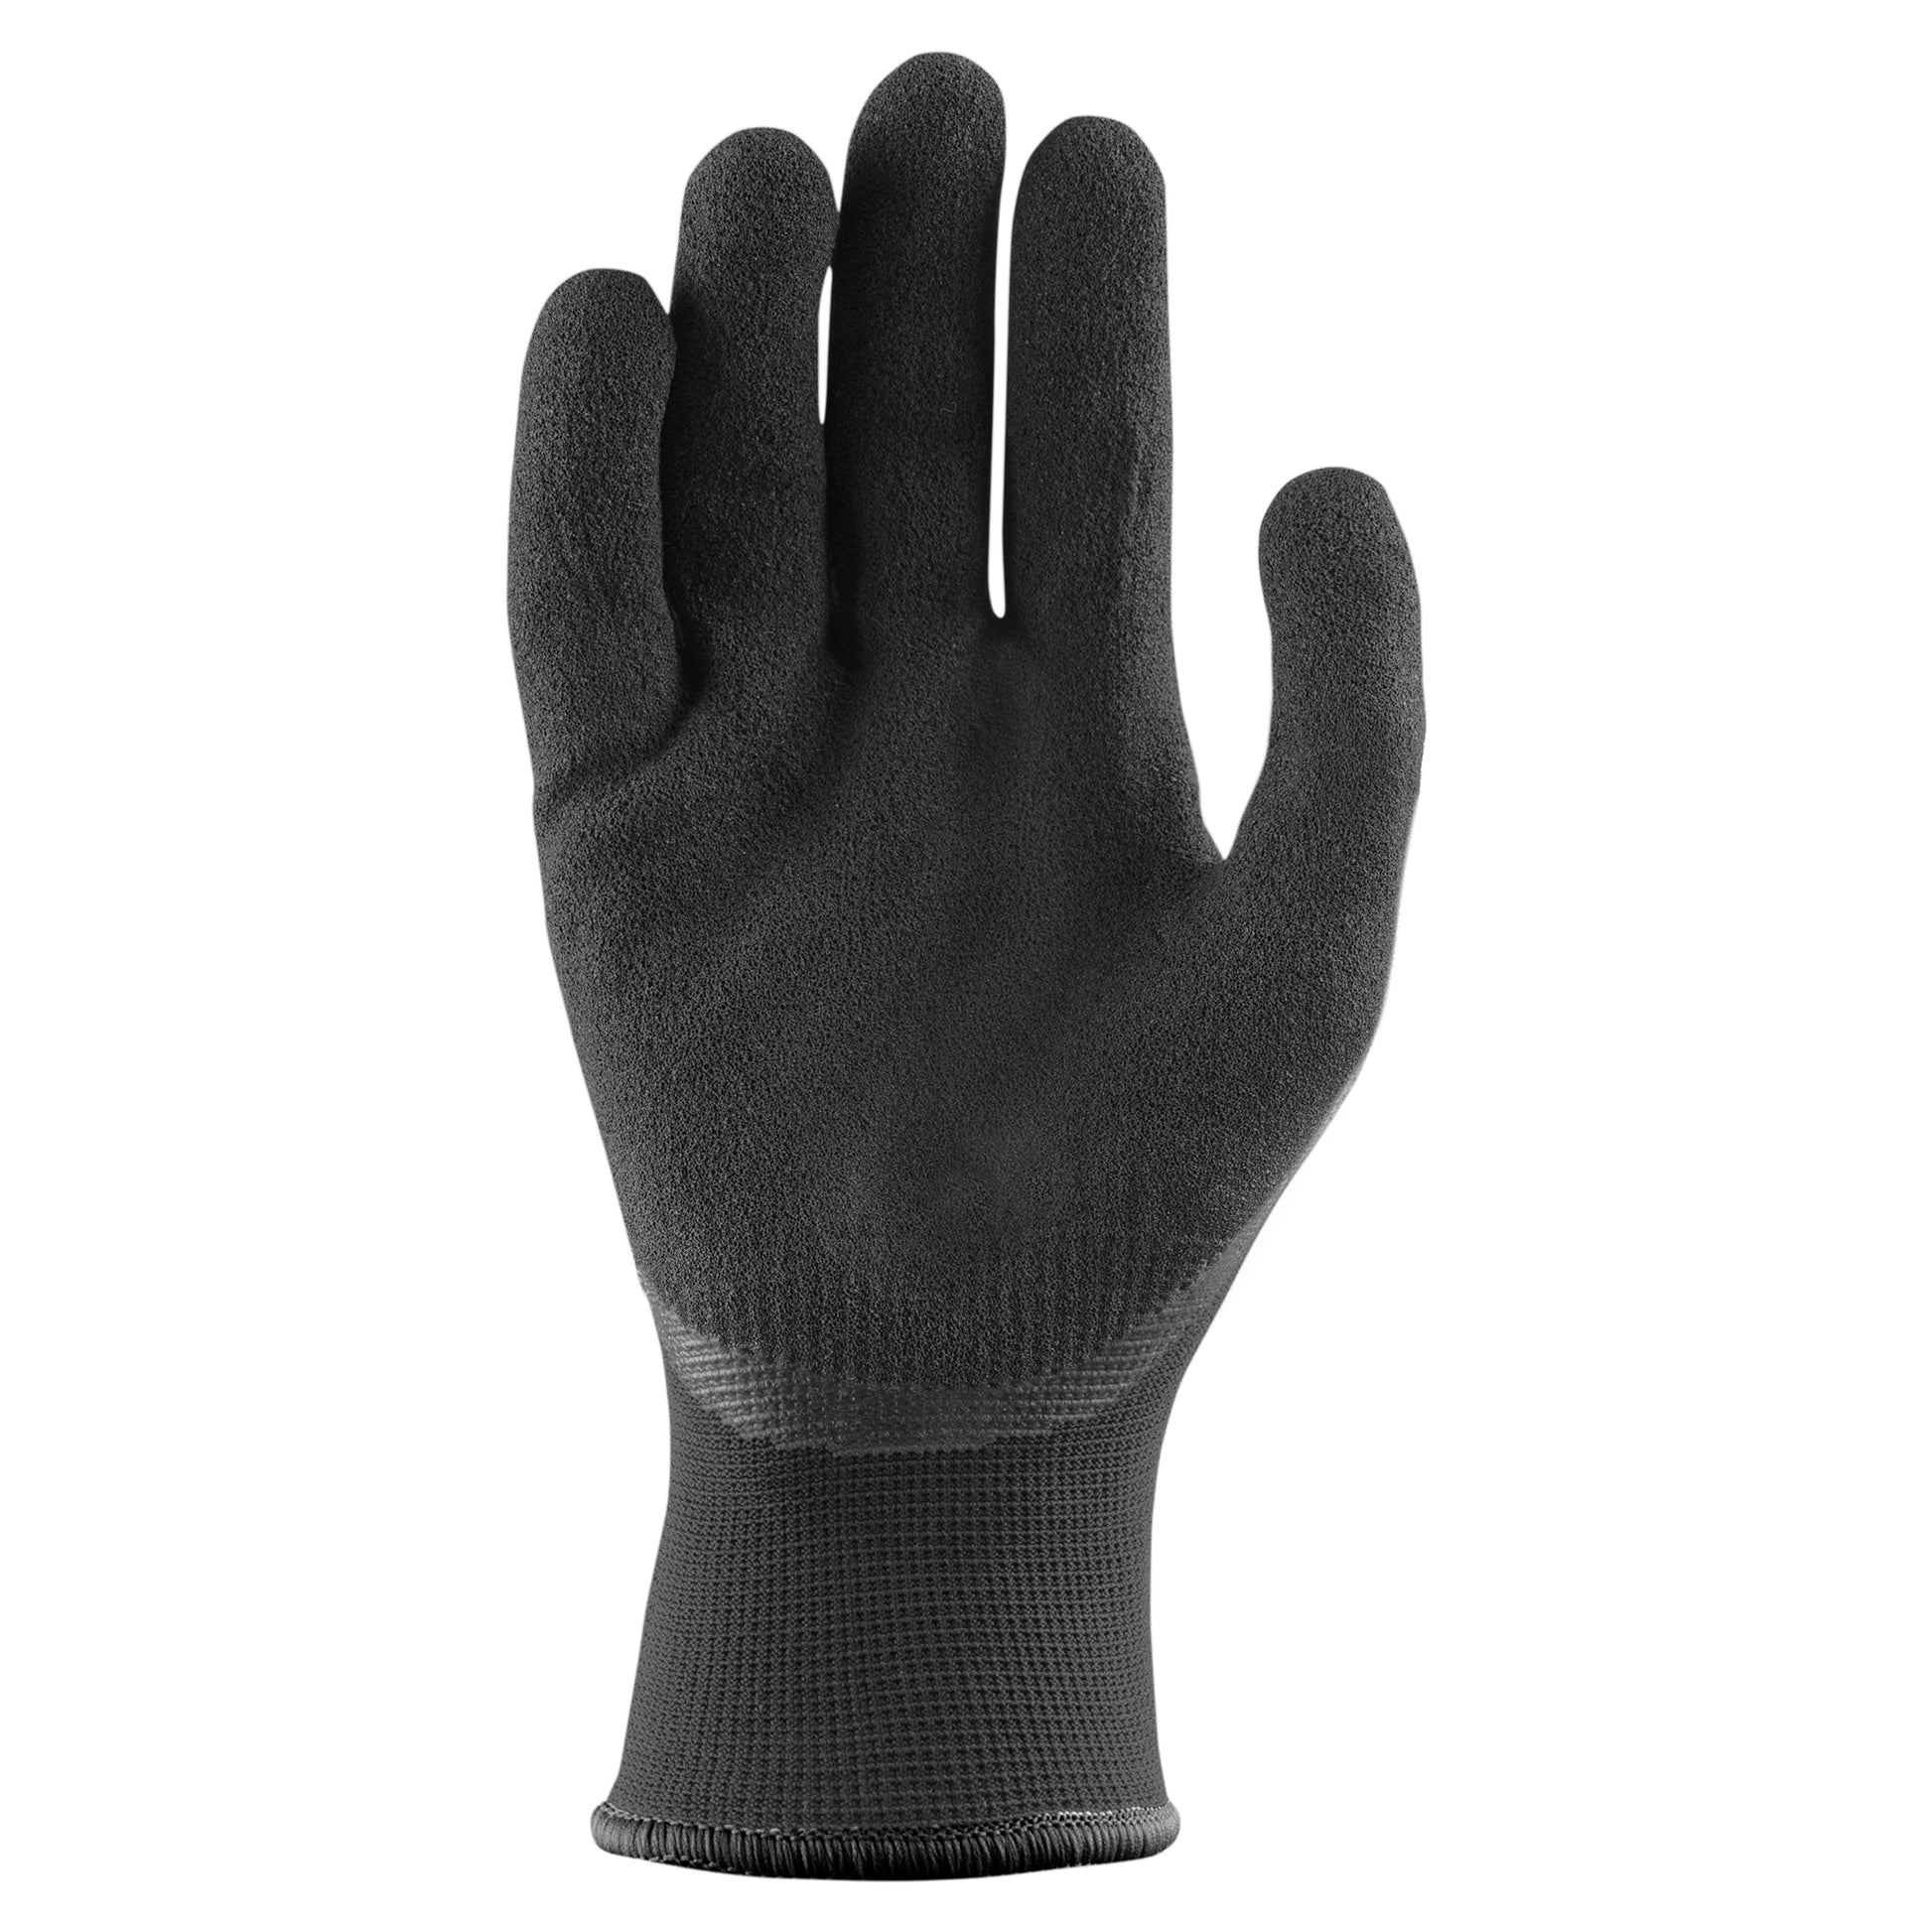 LIFT Safety - Textured Nitrile Glove